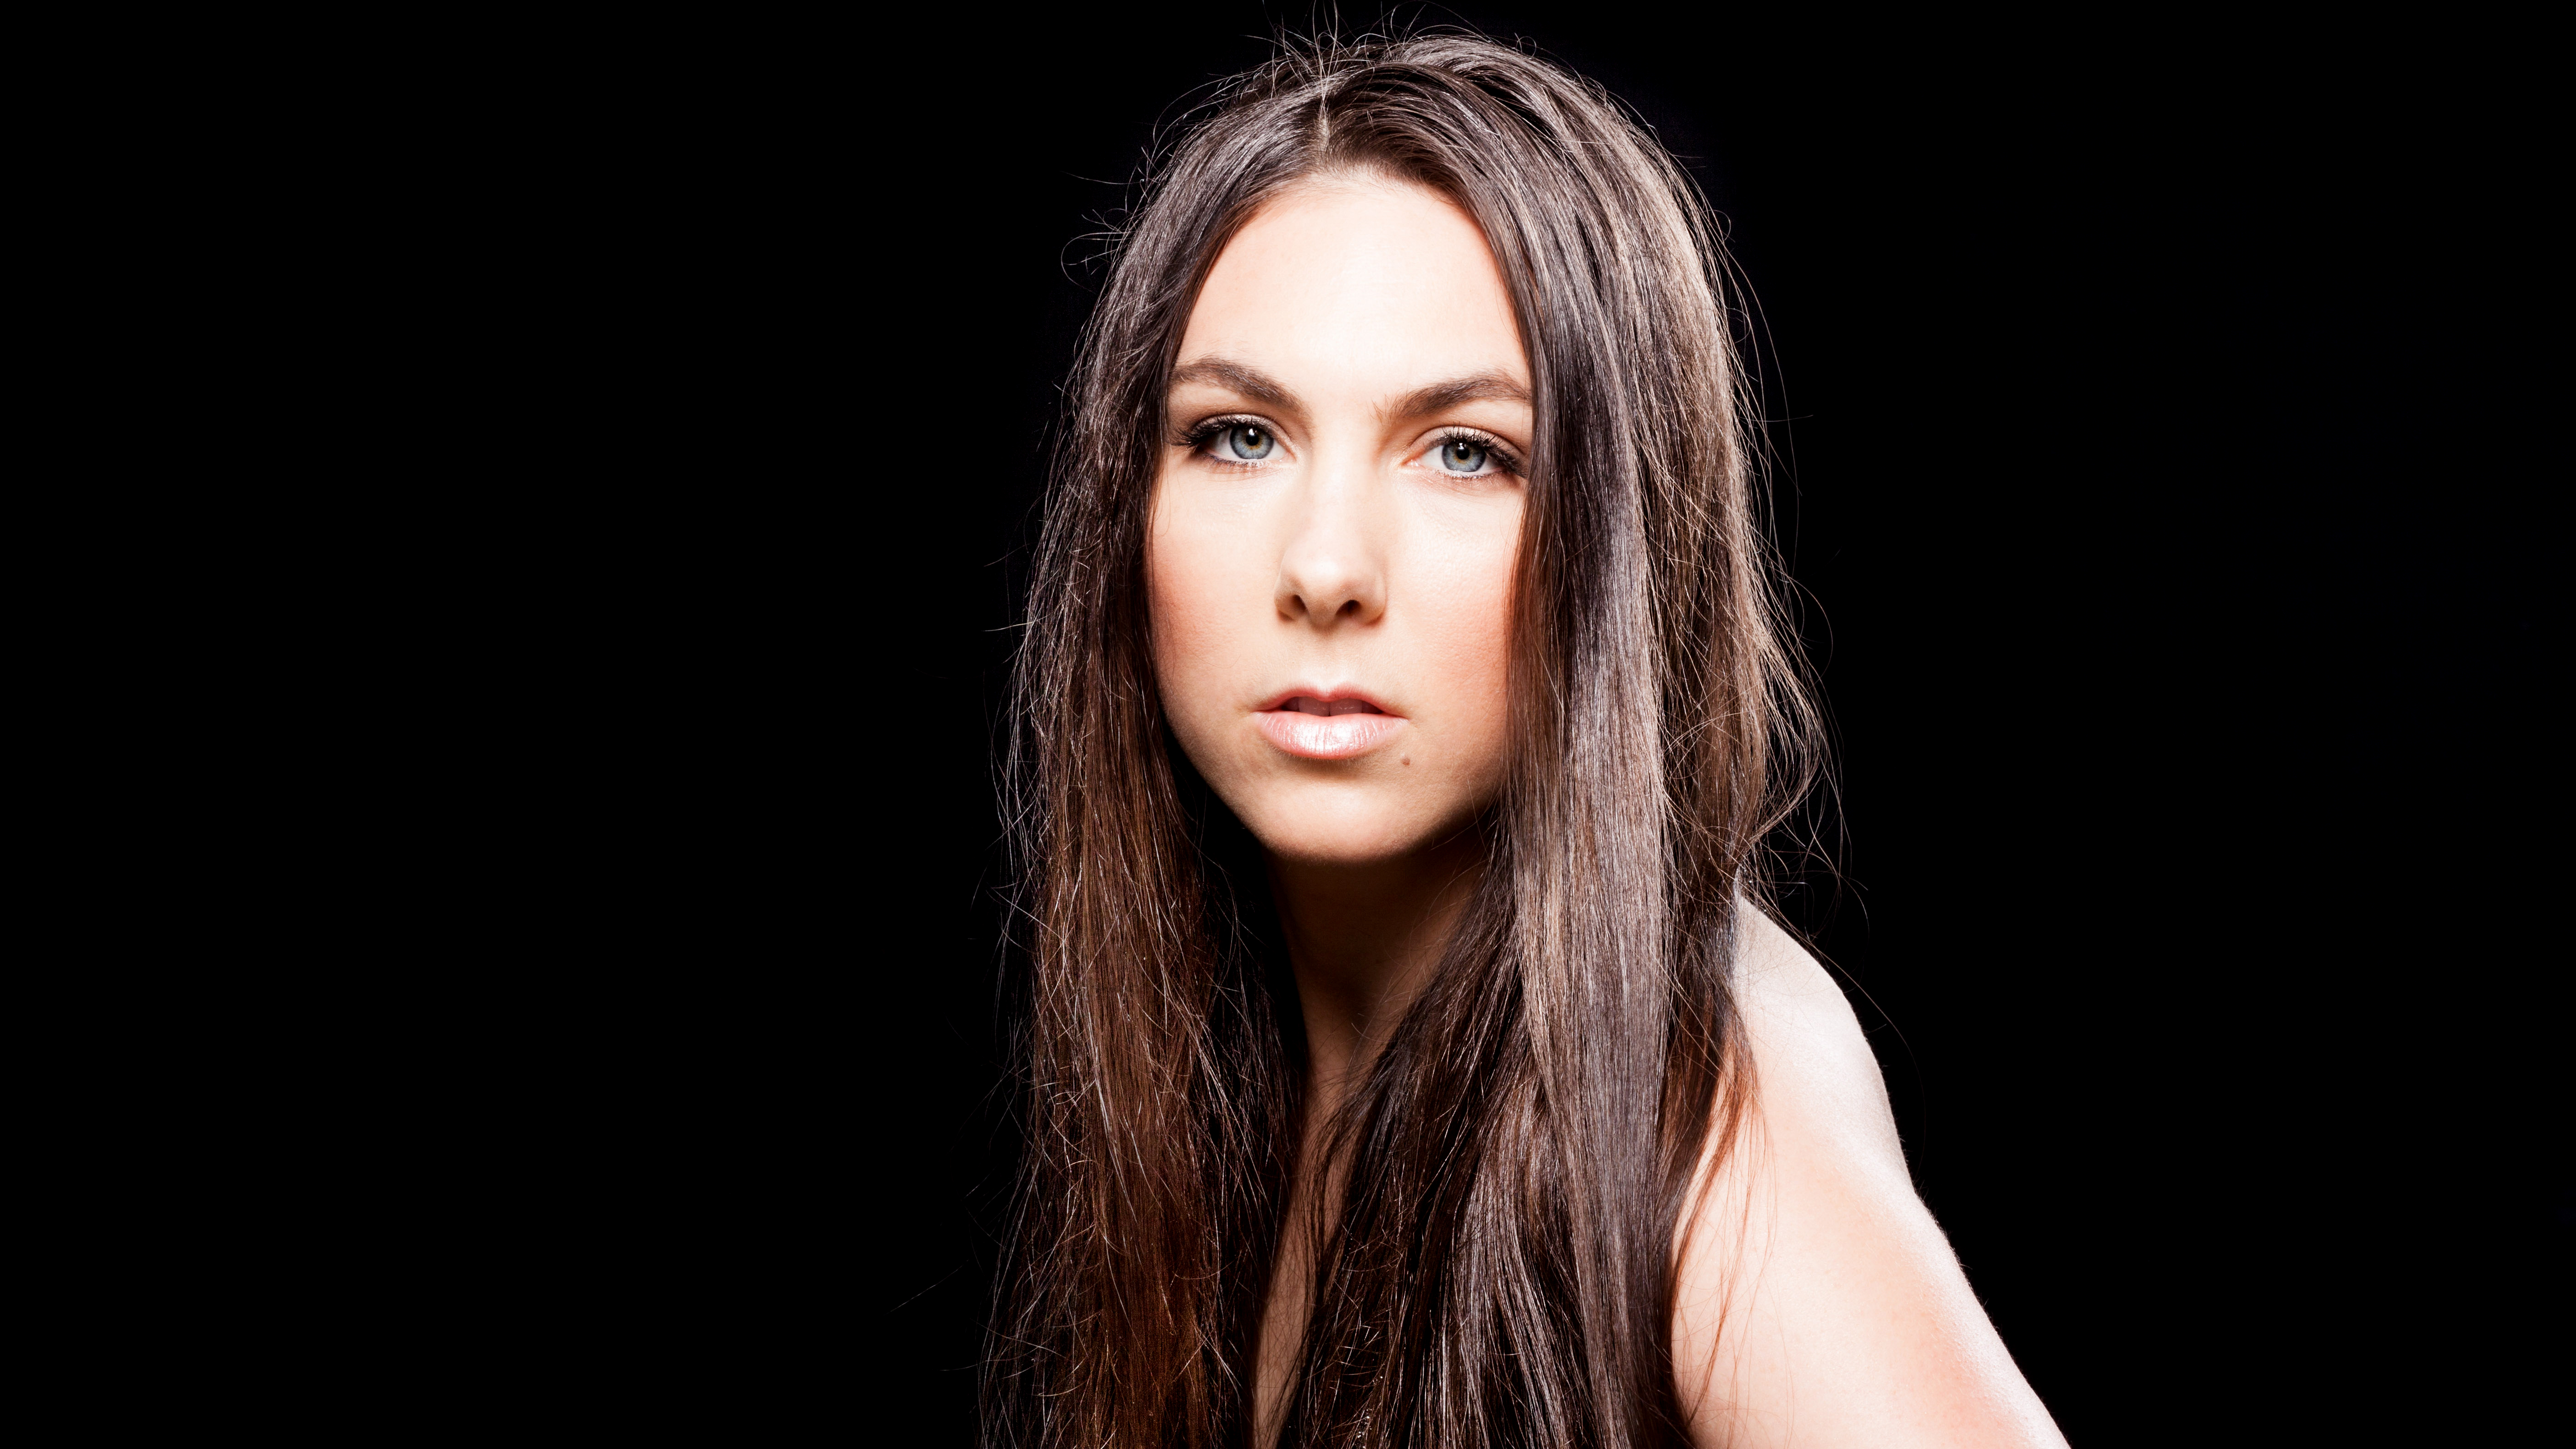 Elize Ryd Amaranthe Singer Brunette Women Long Hair Celebrity Metalheads Power Metal Alternative Met 5616x3159